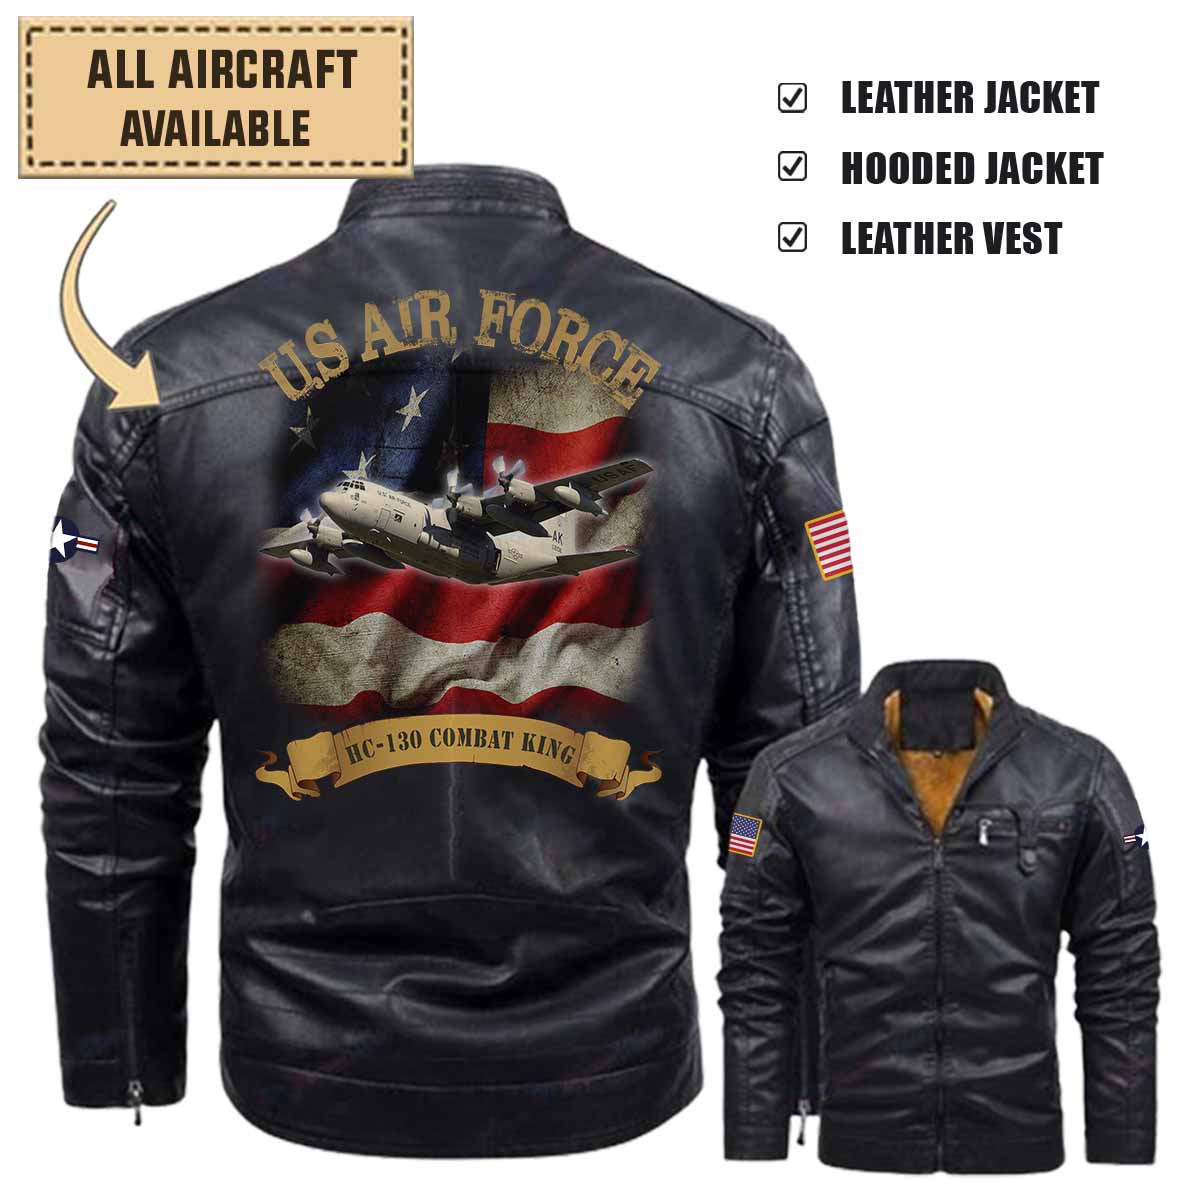 hc 130 combat king hc130 usafaircraft leather jacket and vest sa54s